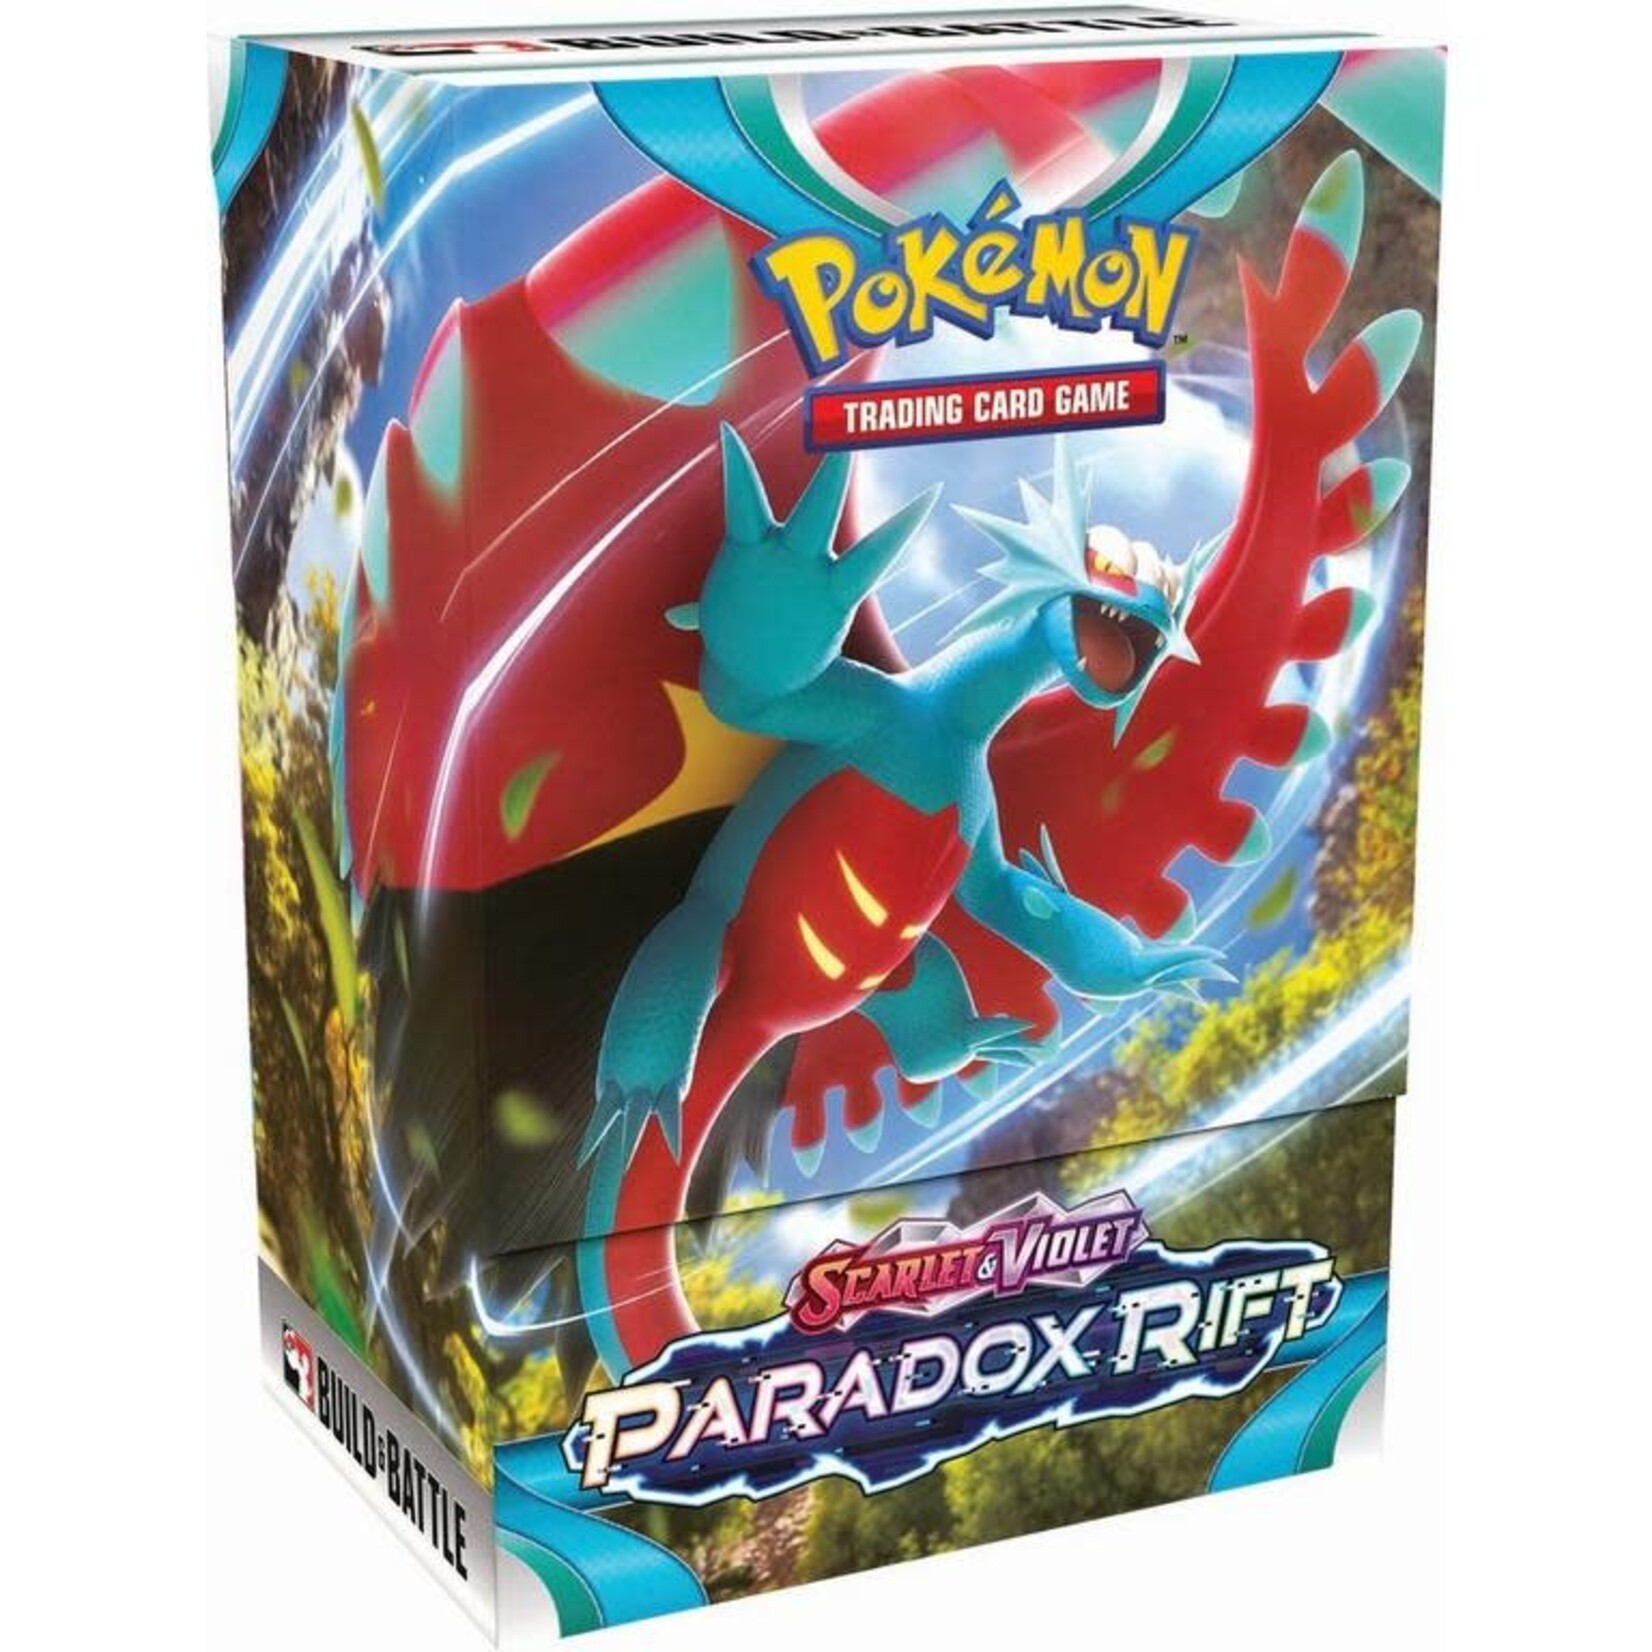 Pokémon Pokémon Paradox Rift Build & Battle Kit